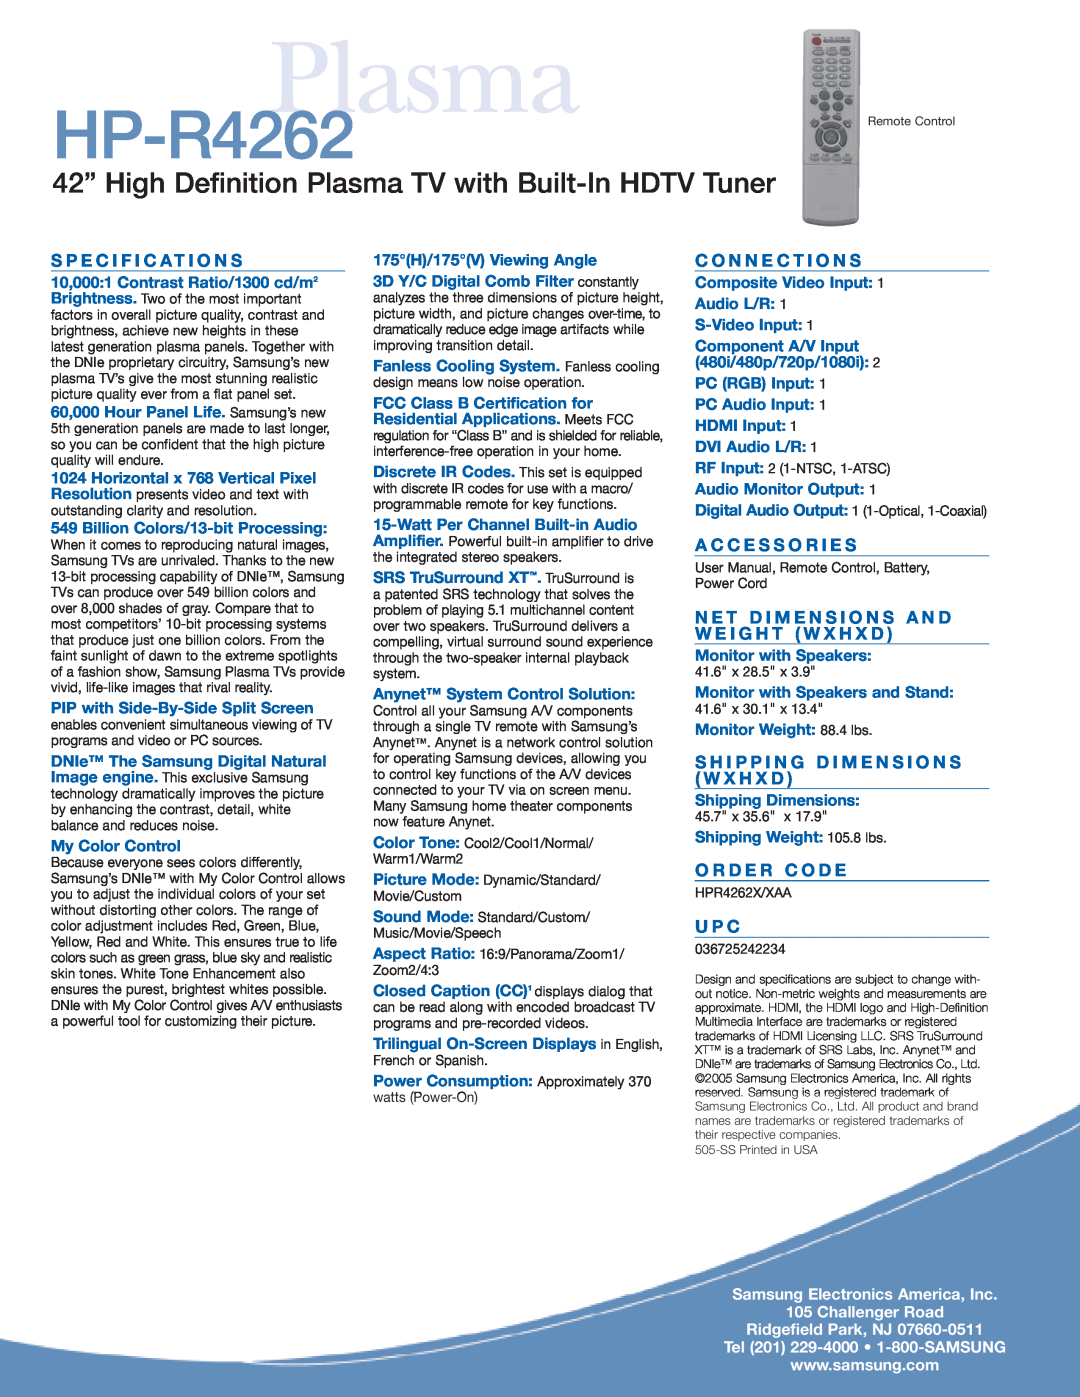 Samsung HP-R4262 42” High Definition Plasma TV with Built-In HDTV Tuner, S P E C I F I C A T I O N S, U P C 